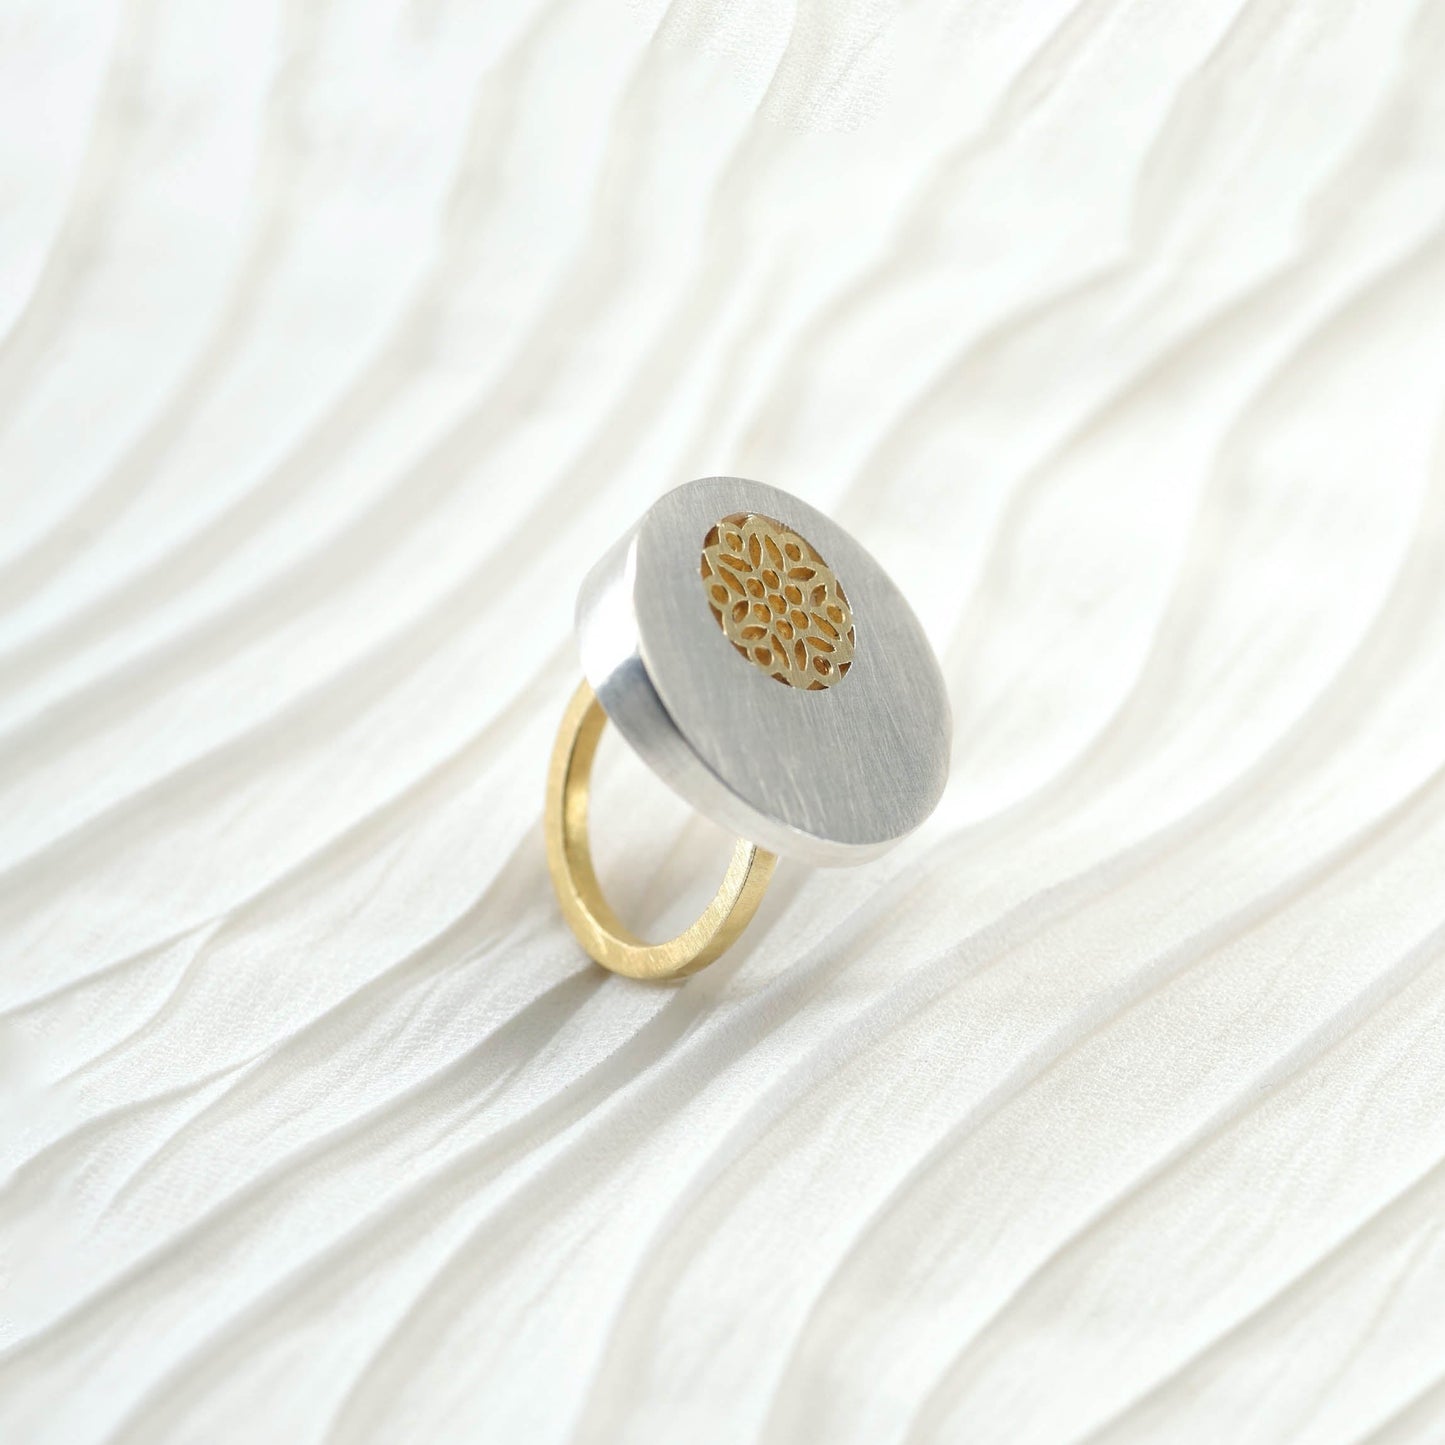 The Sadhana SiGo Silver Gold Ring by Rasvihar